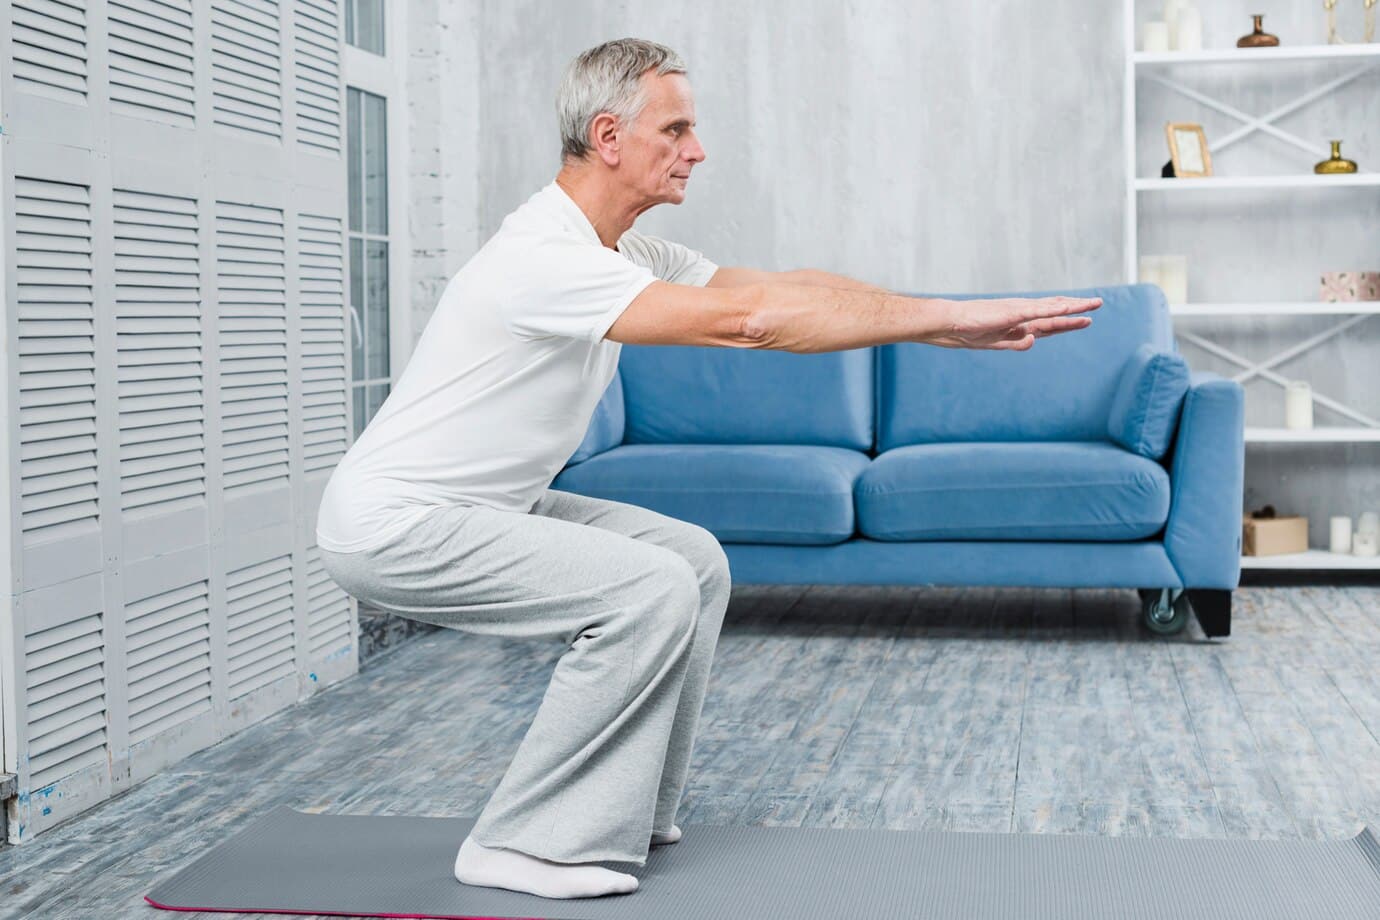 Top 10 Leg Exercise for Seniors: Easy & Effective Tips - Westmont